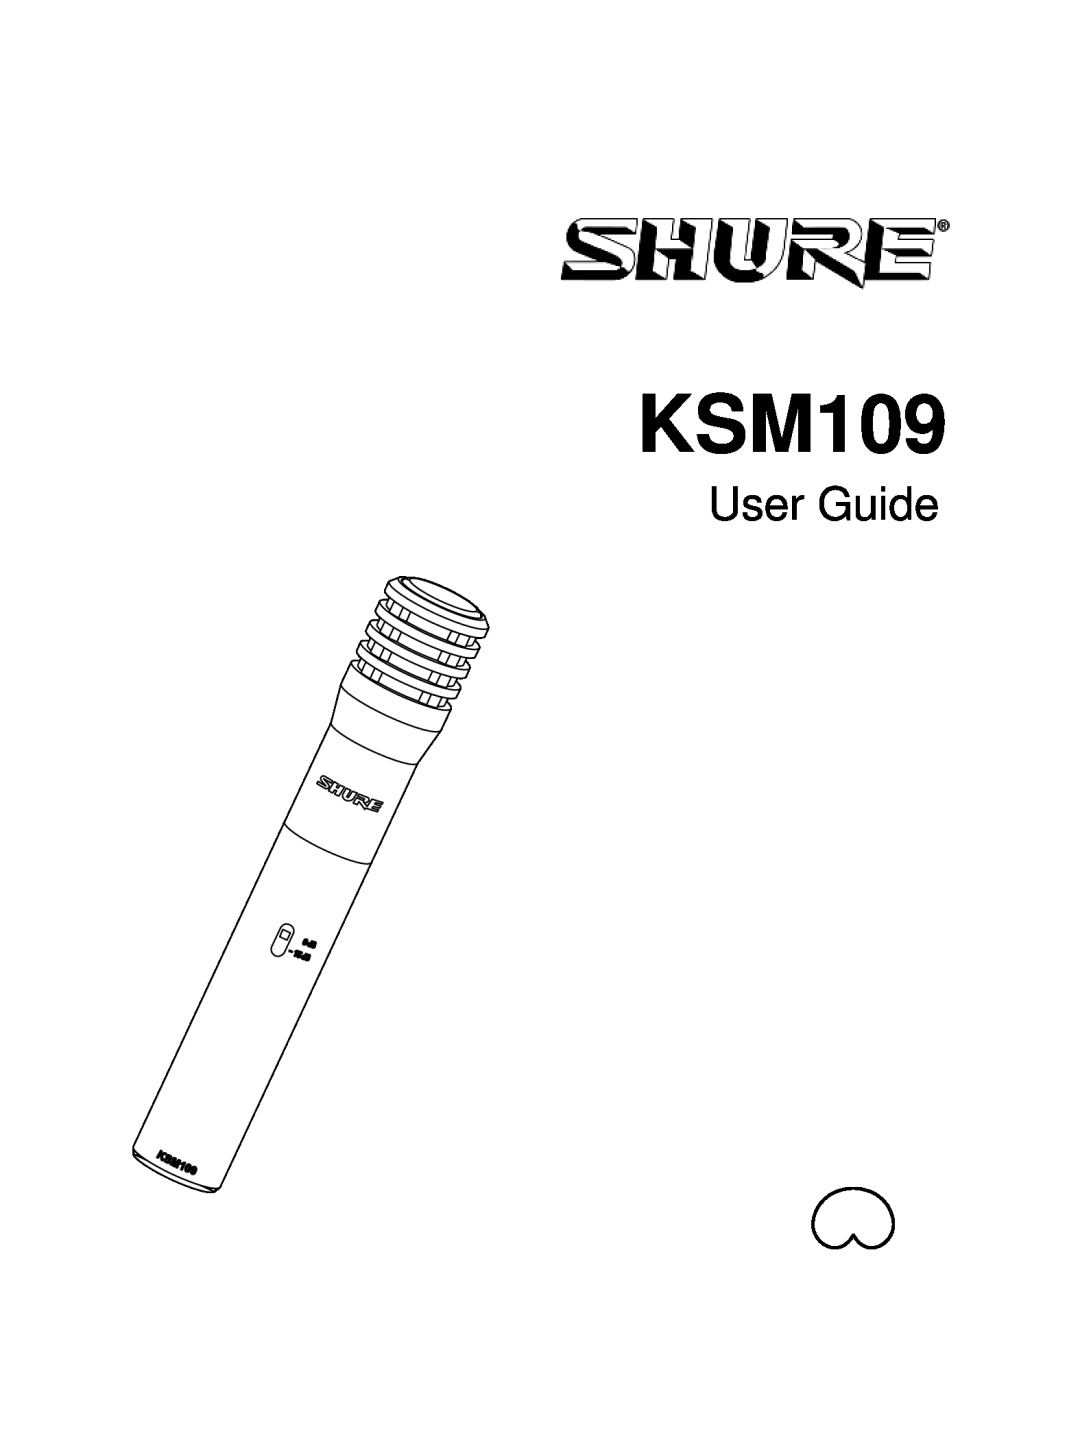 Shure KSM109 manual User Guide, E2003, Shure Incorporated, 27B3142 CE 